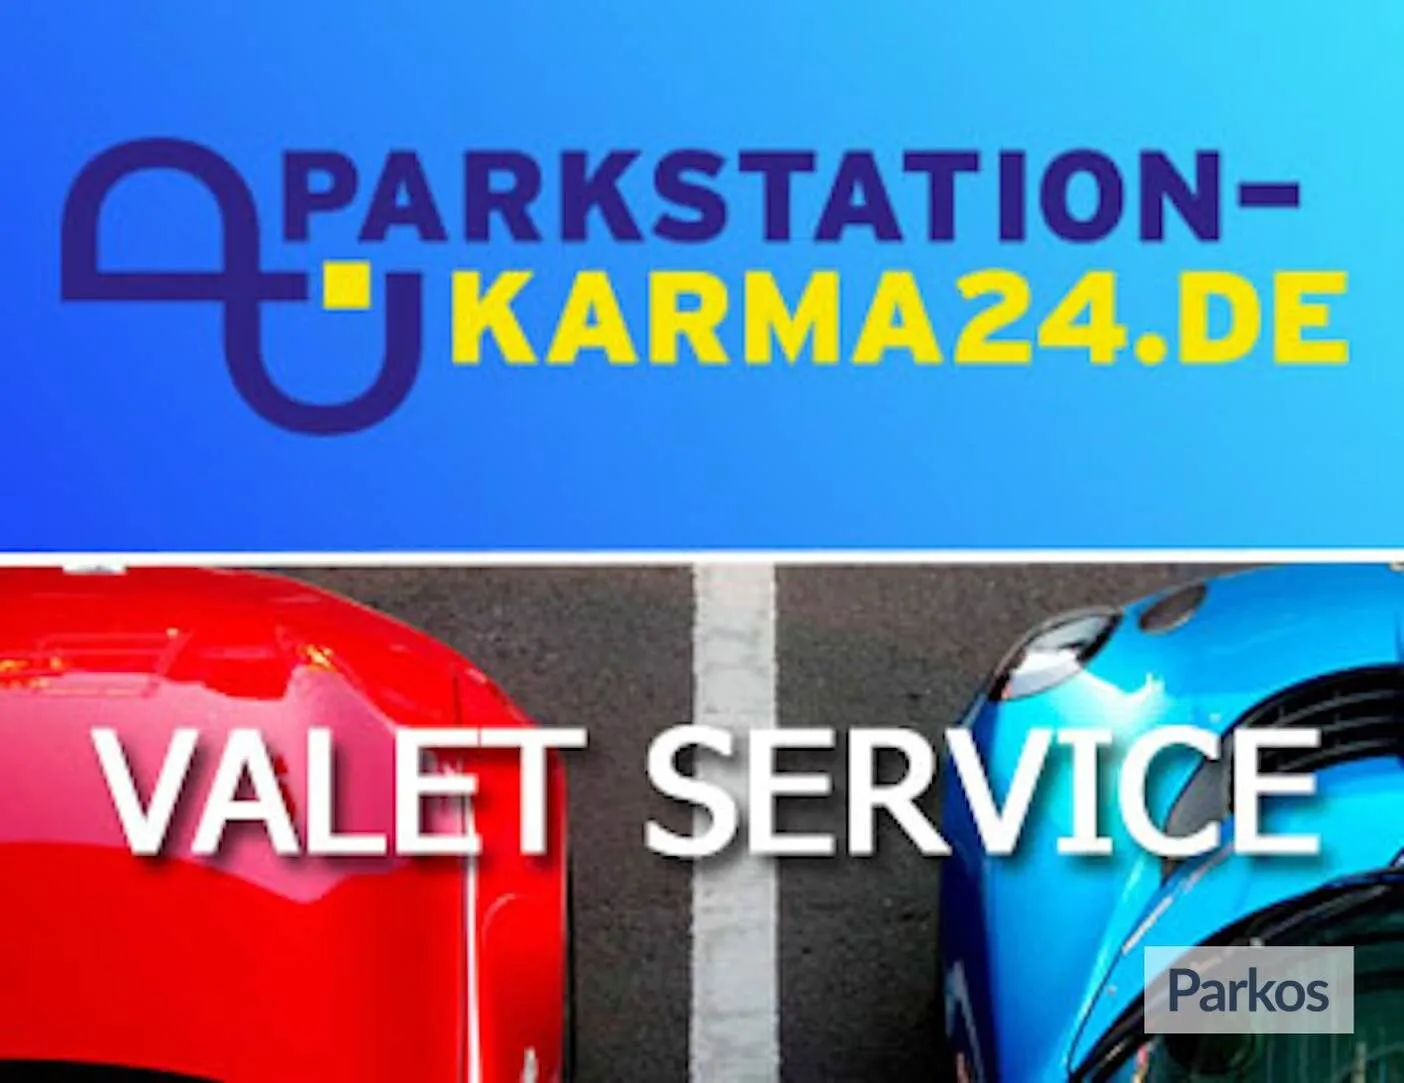 Parkstation-Karma24 - Frankfurt Airport Parking - picture 1